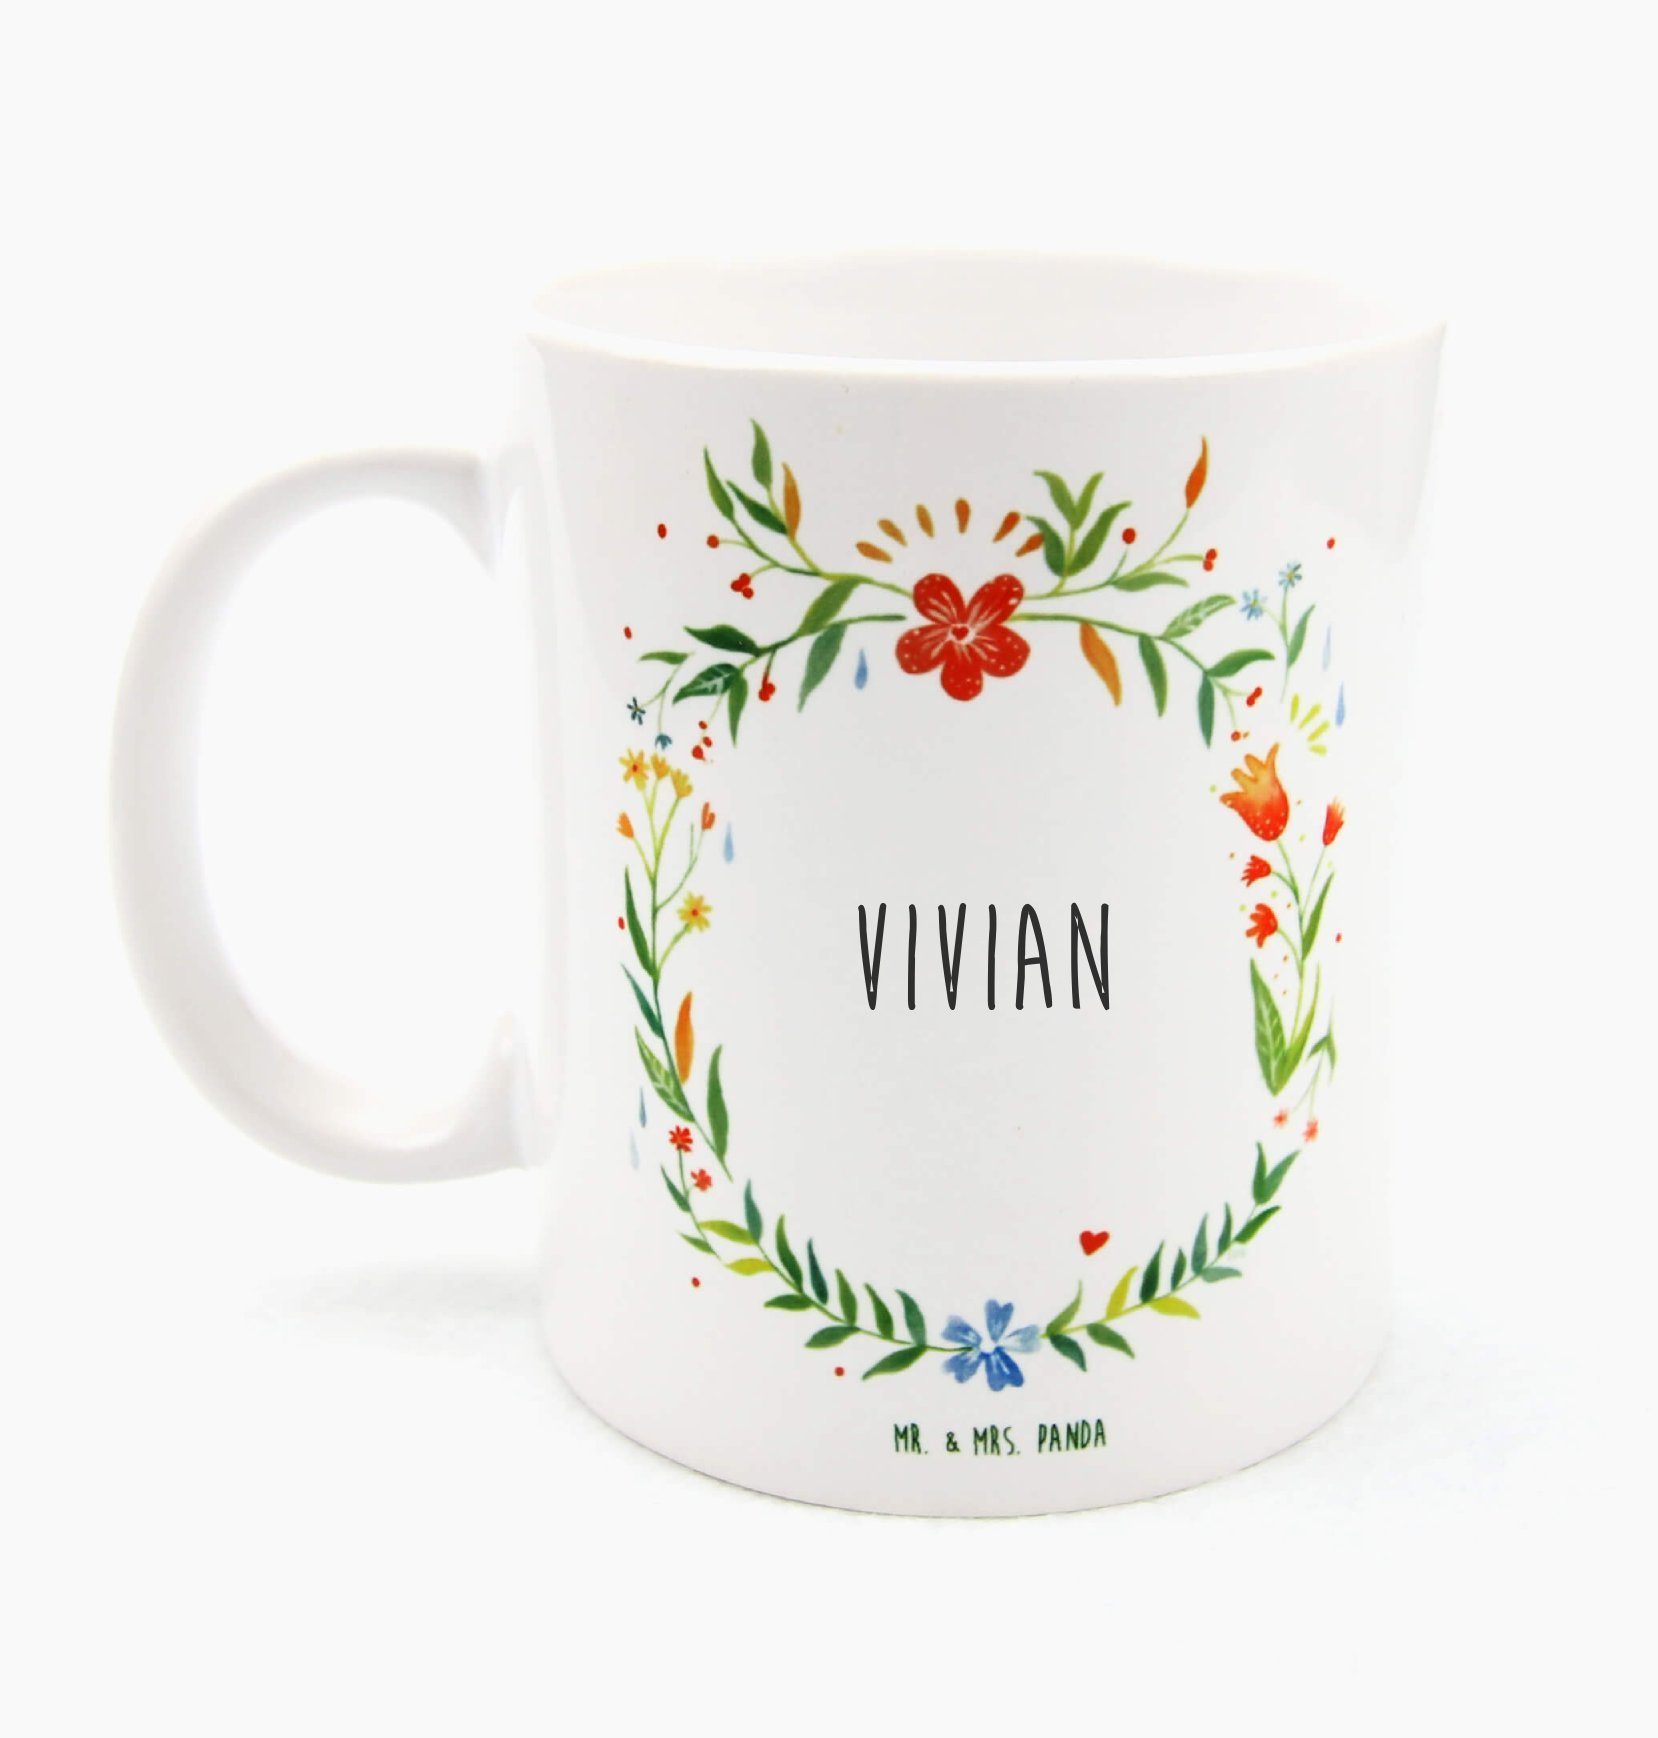 Mr. & Mrs. Panda Tasse Vivian - Geschenk, Porzellantasse, Büro Tasse, Tasse Sprüche, Kaffeet, Keramik